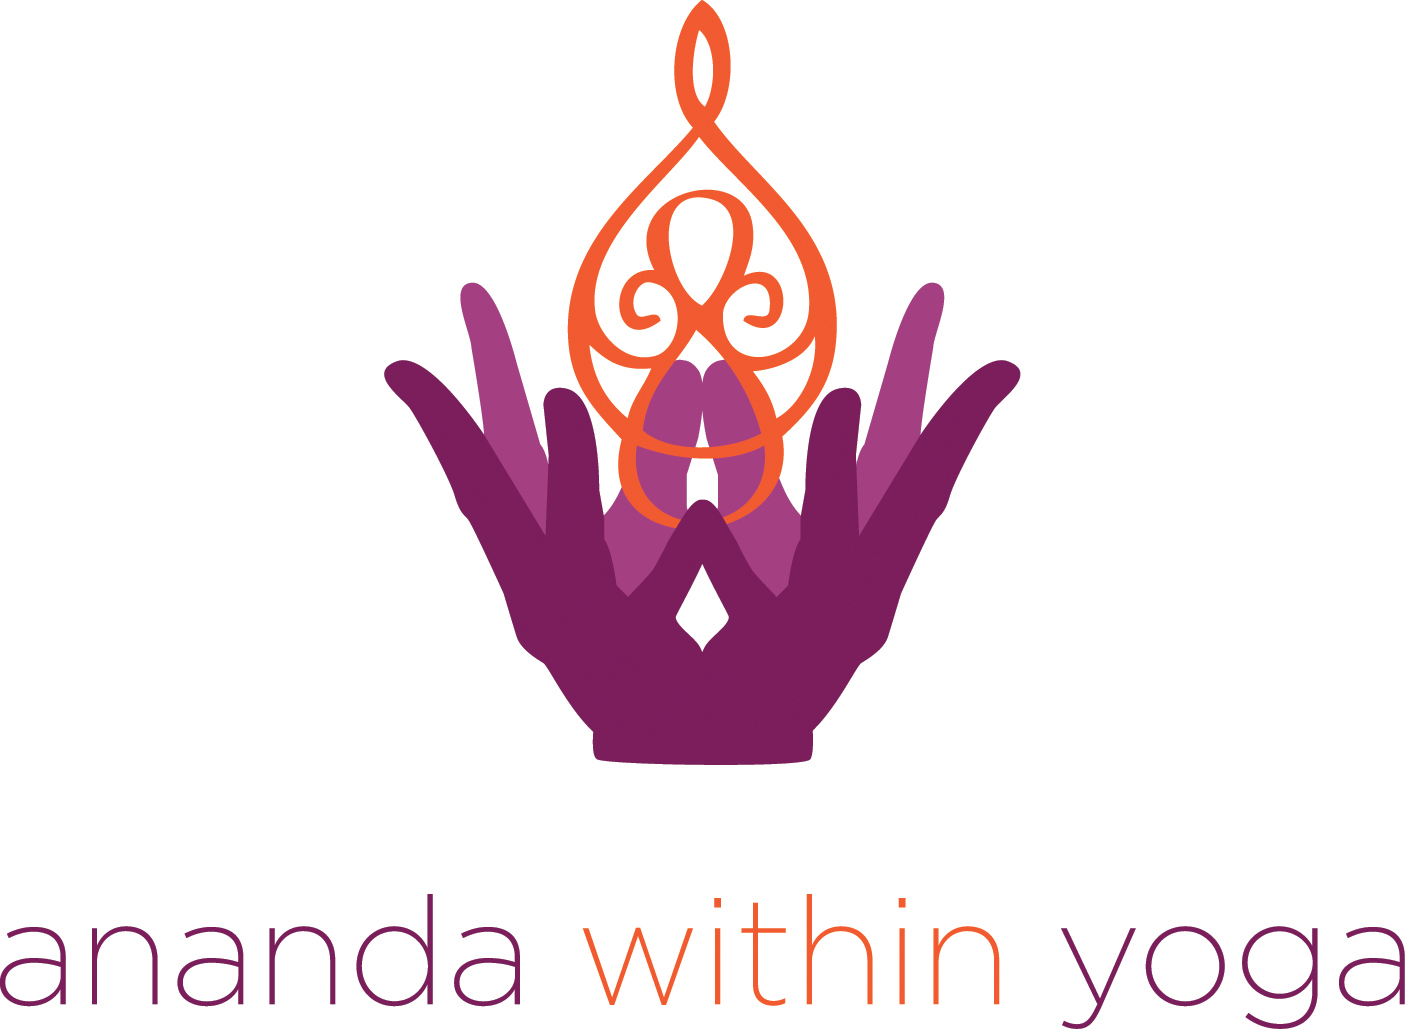 Ananda Within Yoga